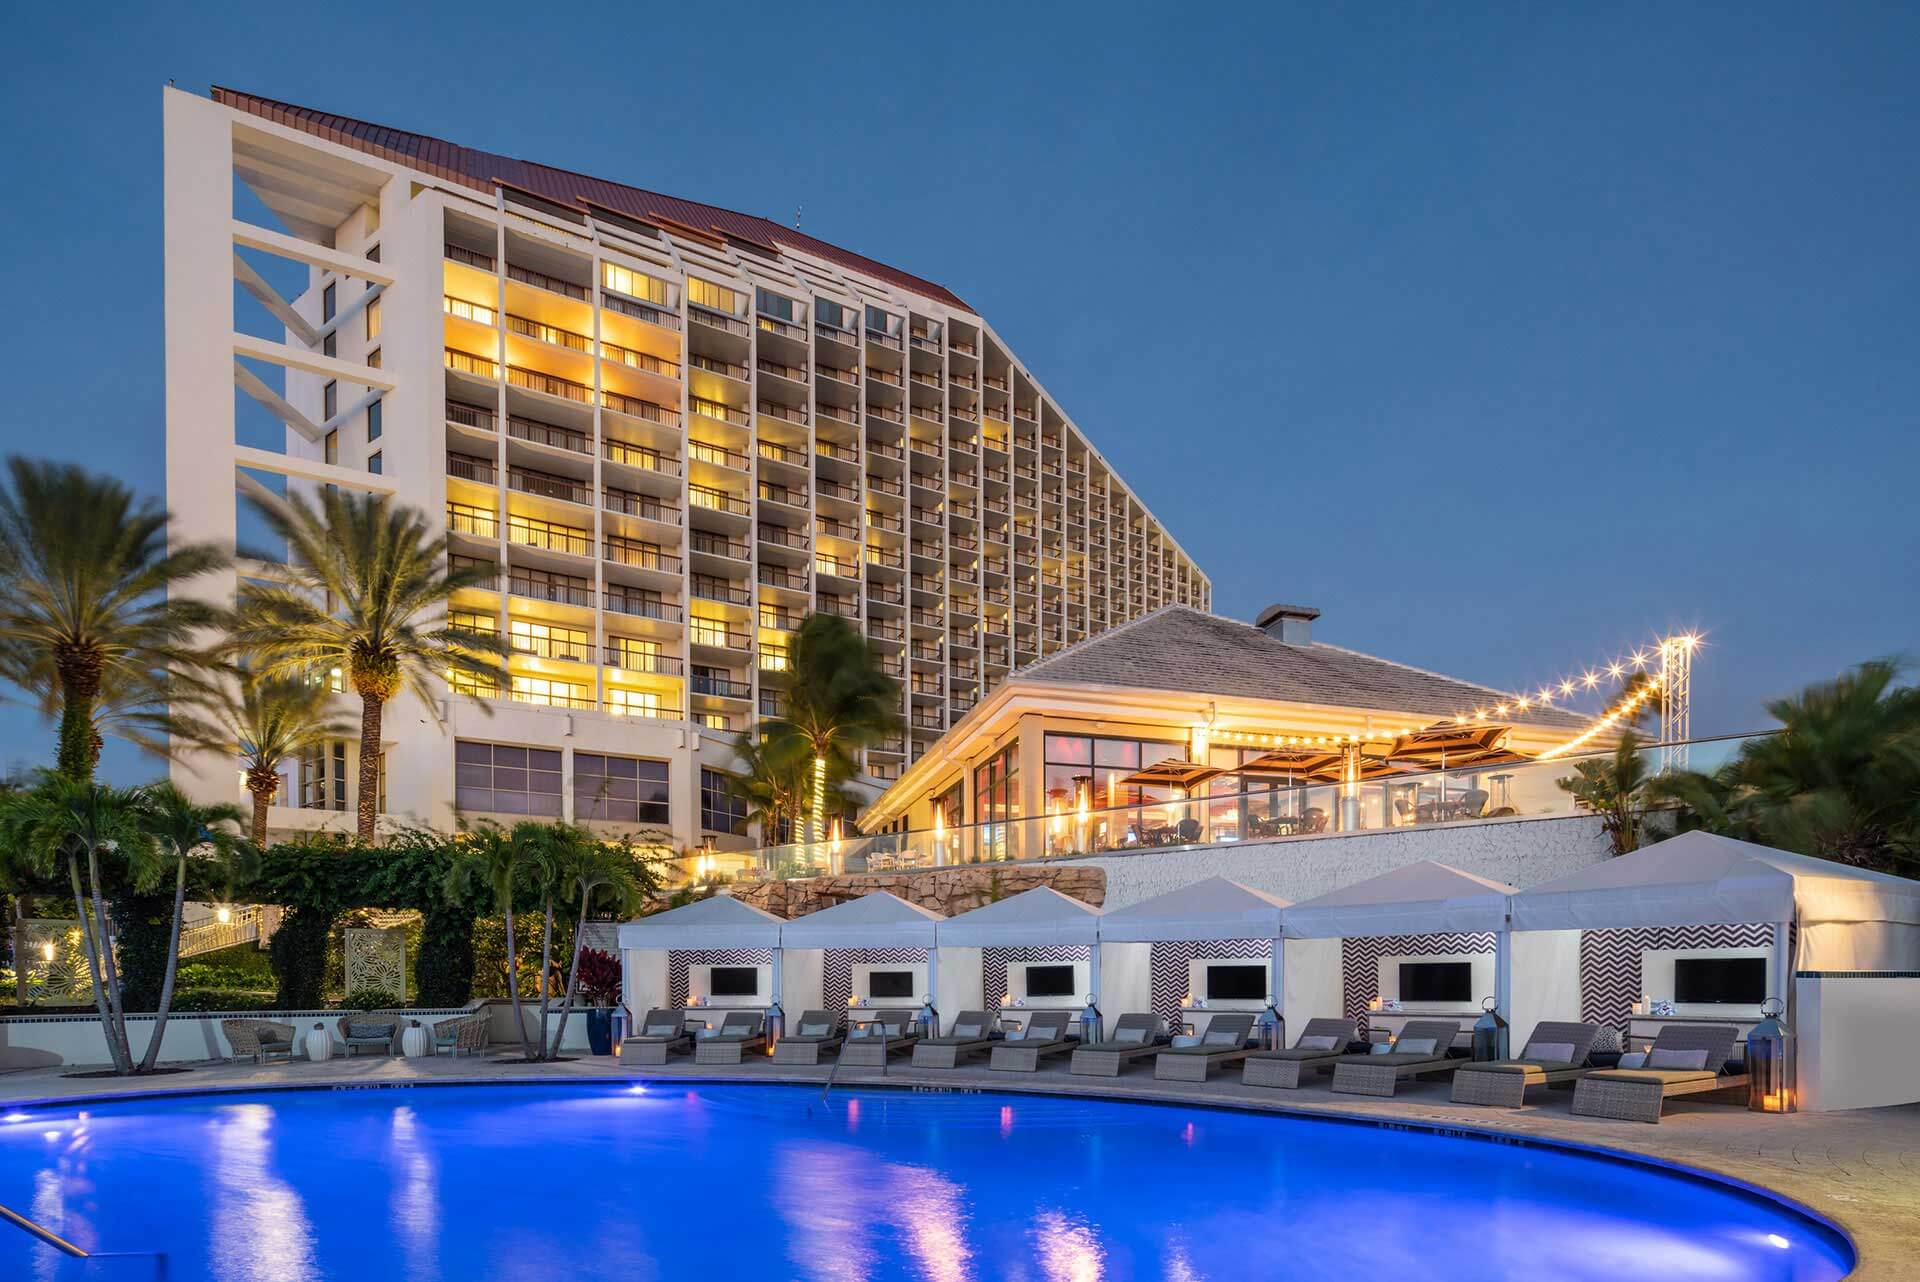 Naples Hotel | Naples Grande Beach Resort - Map Of Hotels In Naples Florida